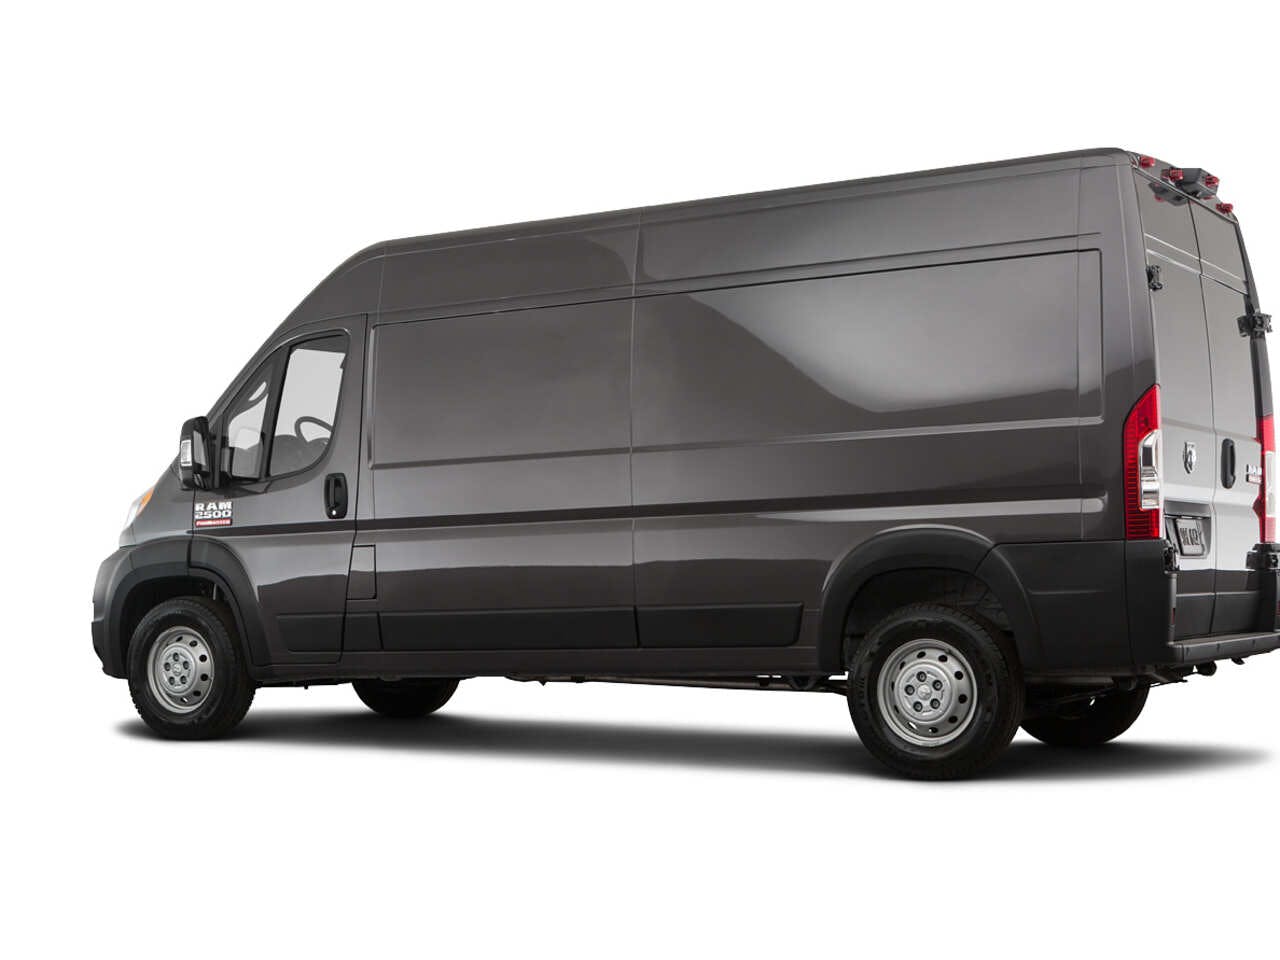 2020 Ram ProMaster Cargo Van Review | Pricing, Trims & Photos - TrueCar